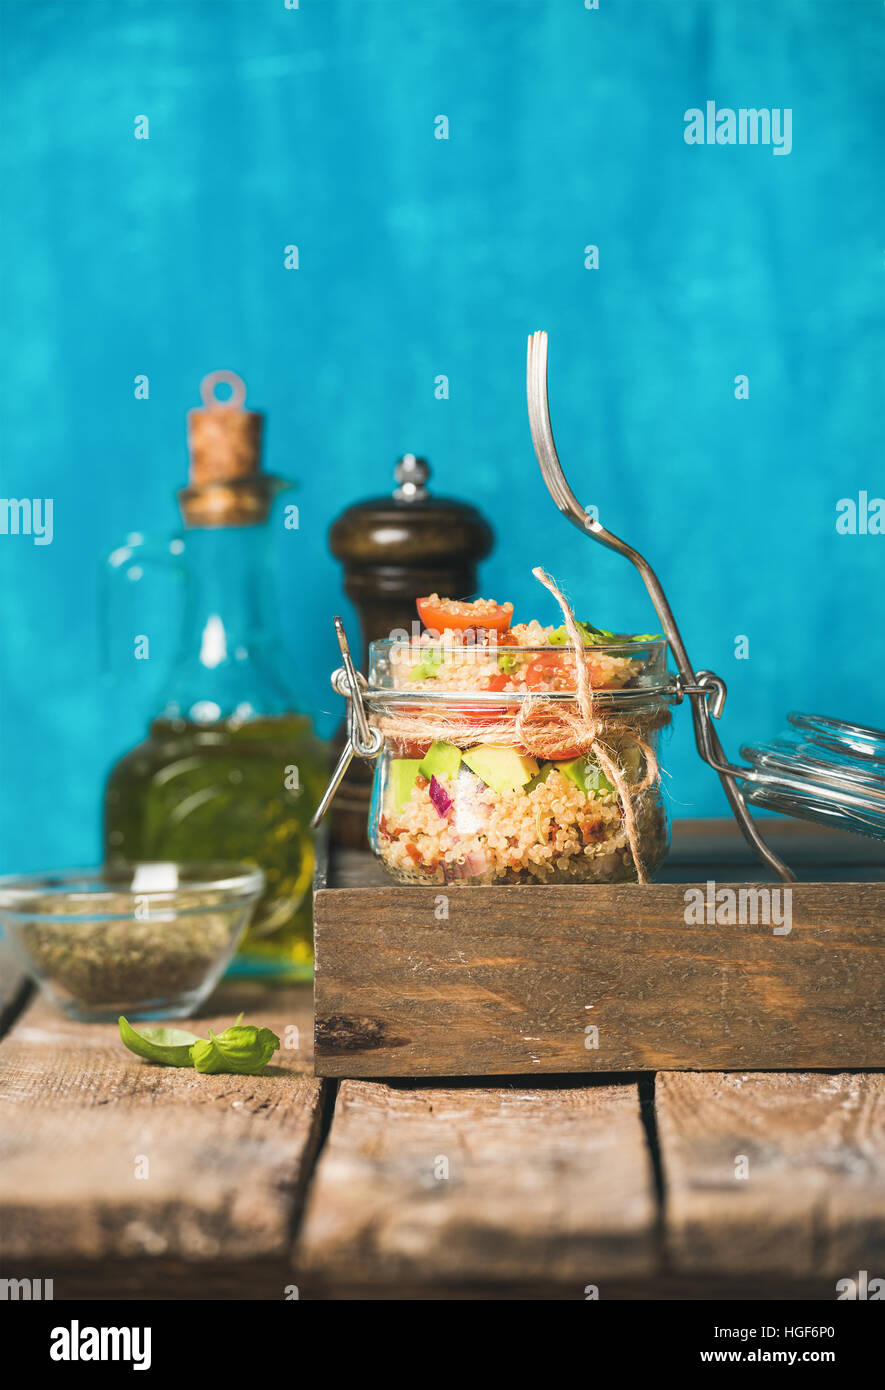 Healthy homemade jar quinoa salad with tomatoes, avocado and fresh basil. Detox, dieting, vegetarian, vegan, clean eating food concept. Bright blue ba Stock Photo